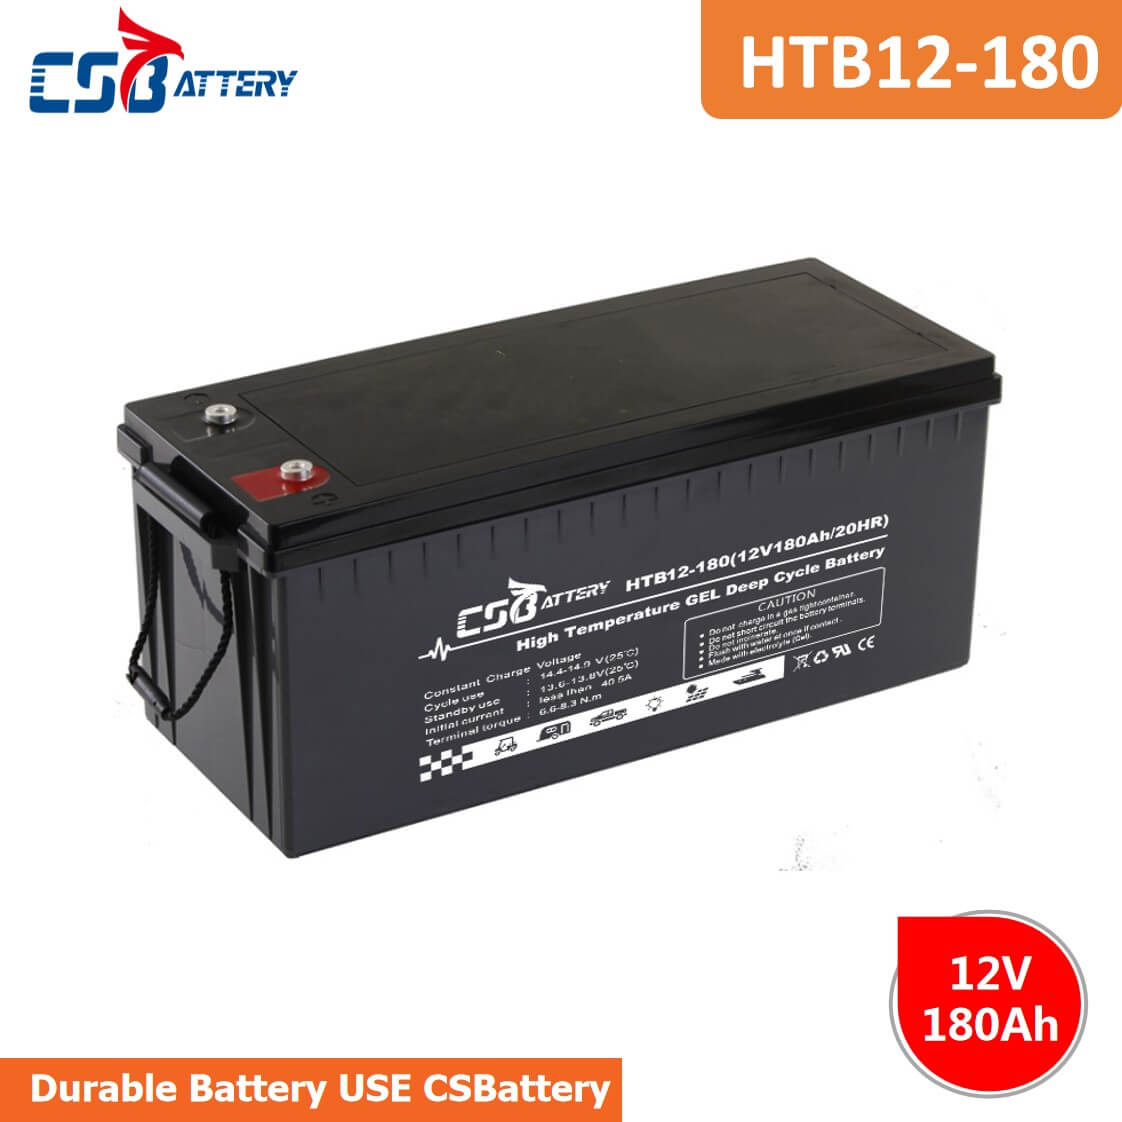 HTB12-180 12V 180AH High-Temp Deep Cycle Batteries